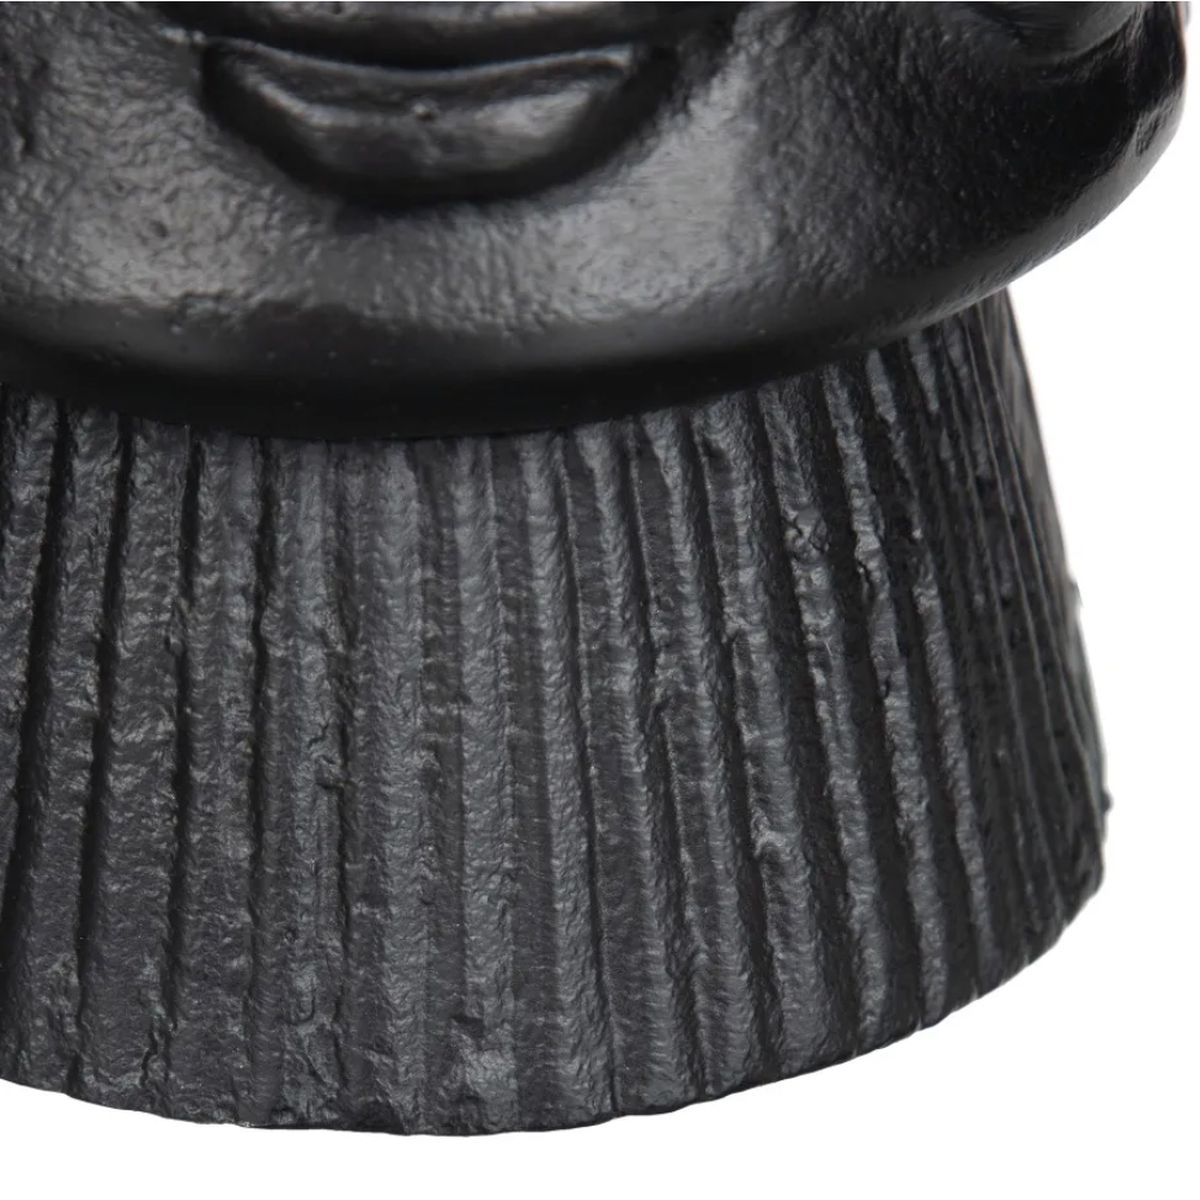 Black Face Vase 34 cm